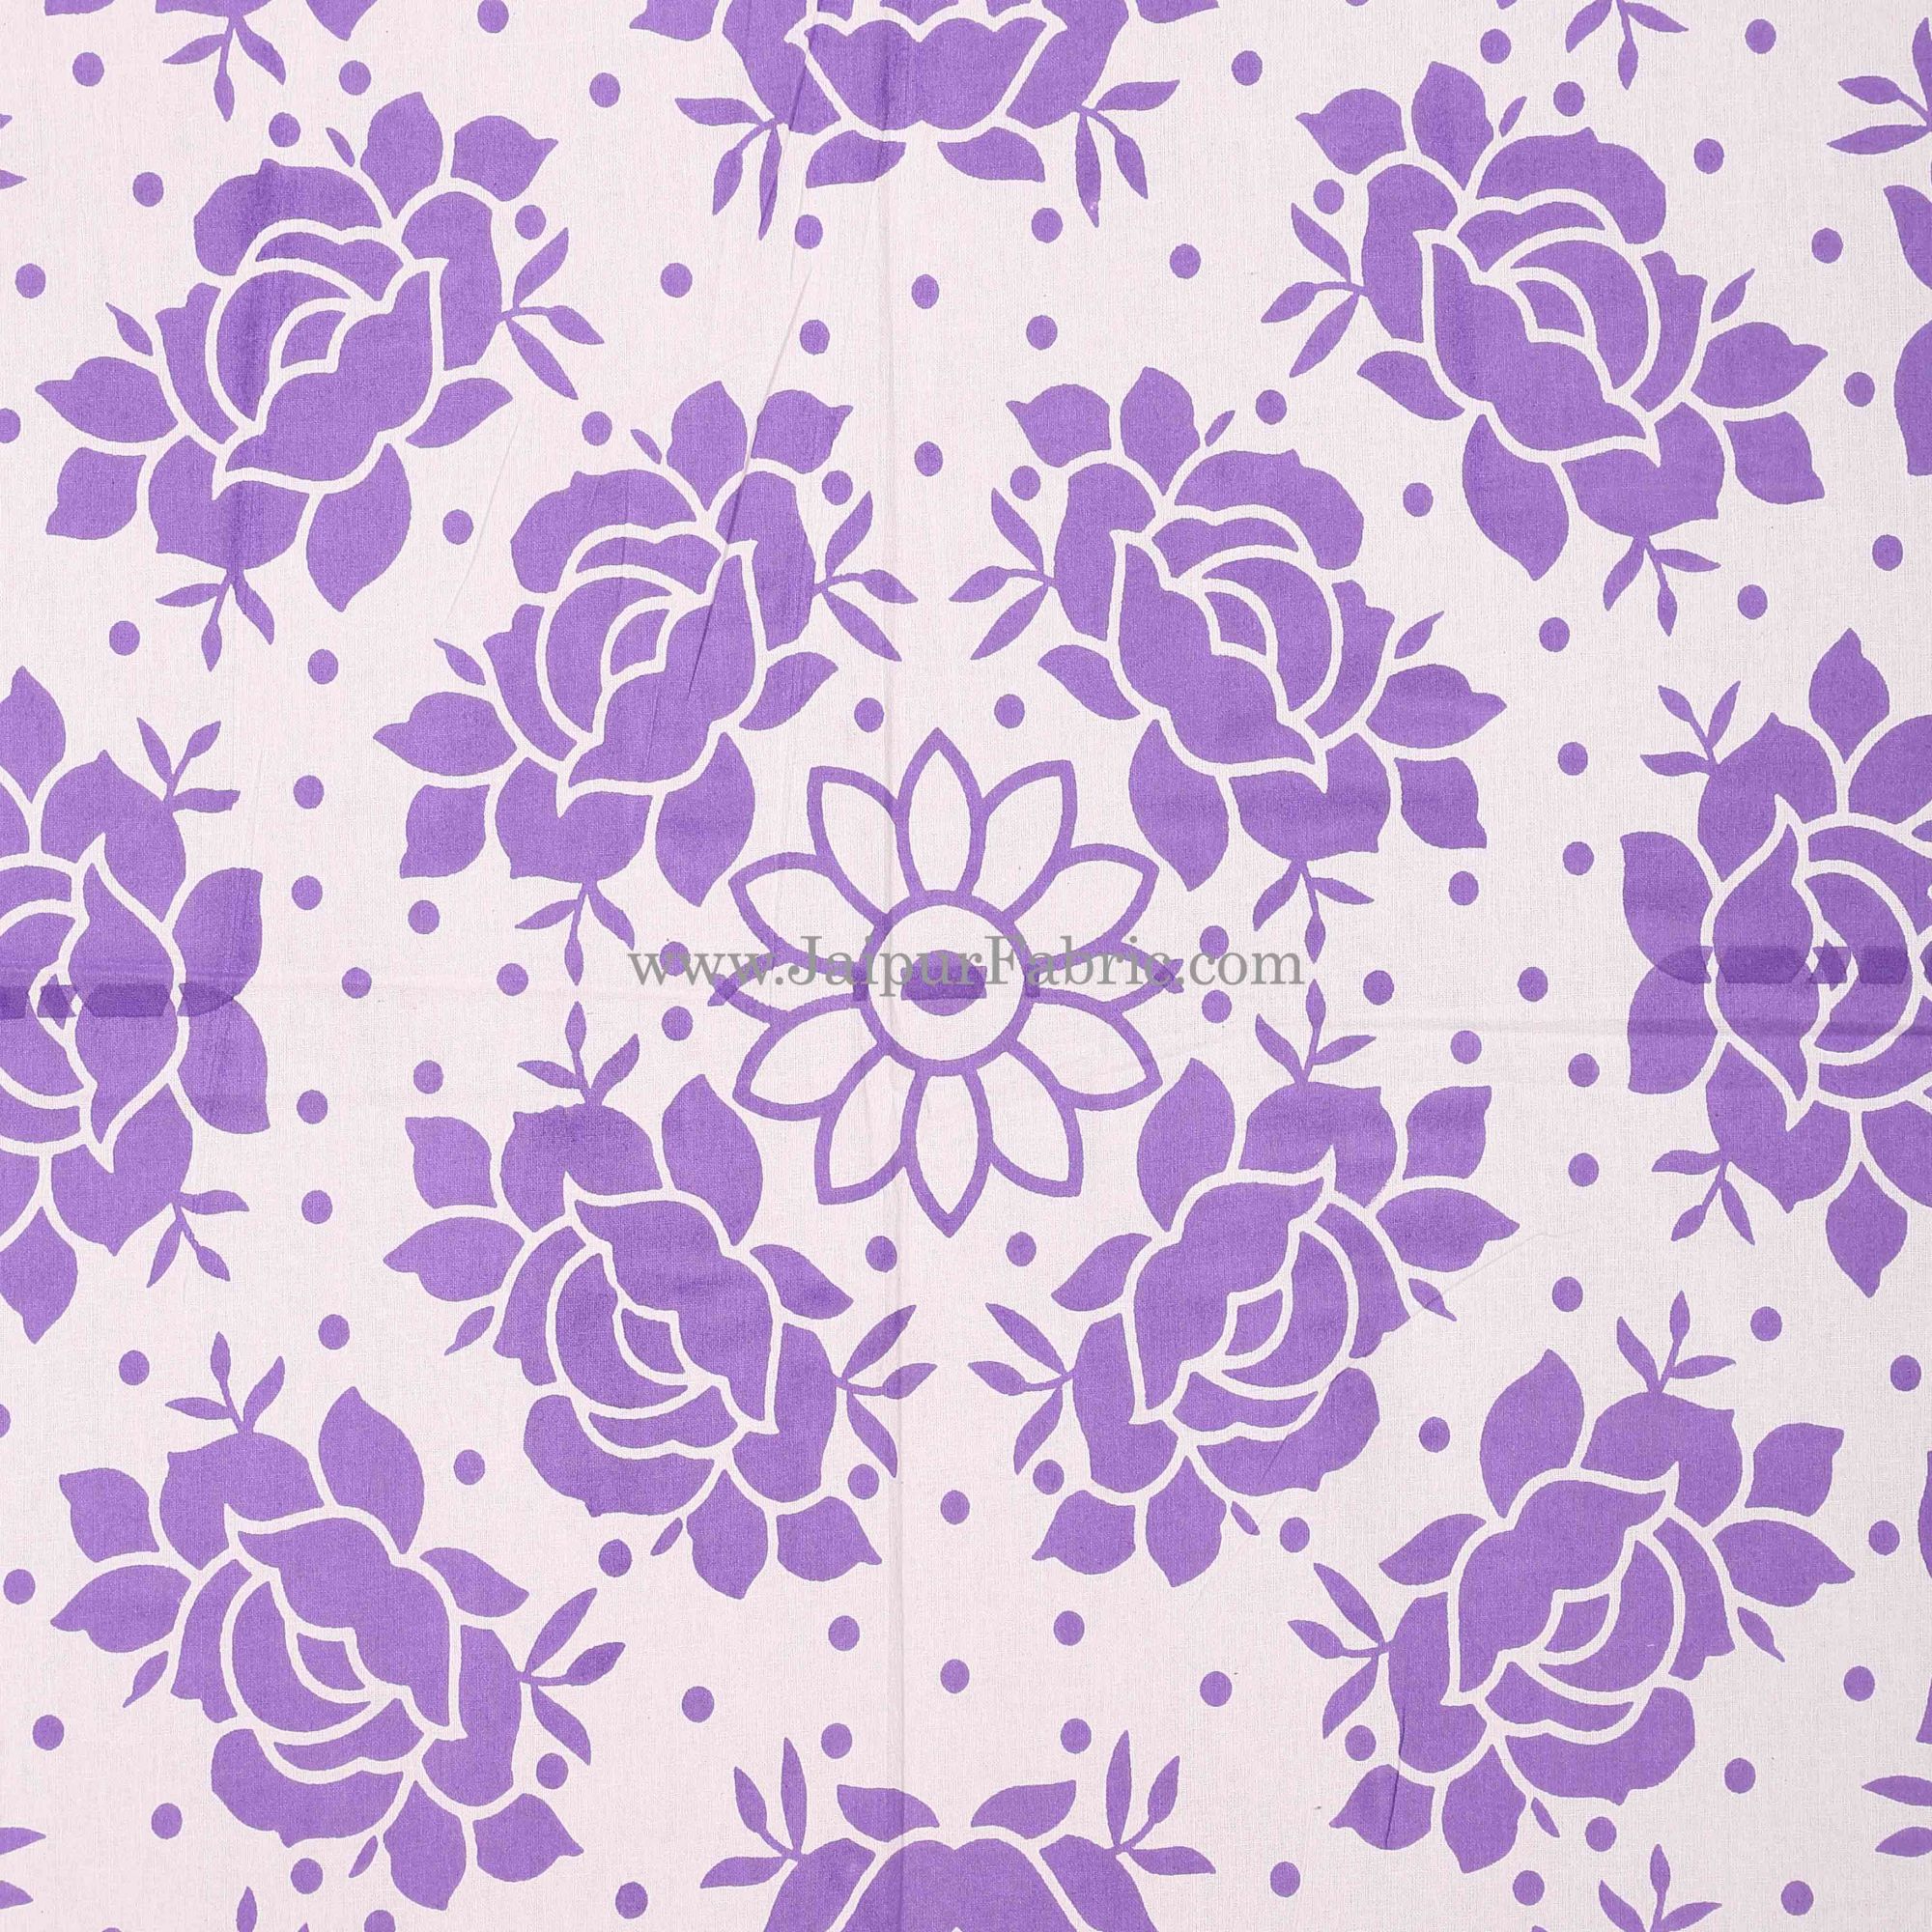 Purple Border Purple Base White Lotus Print Cotton Double Bed Sheet